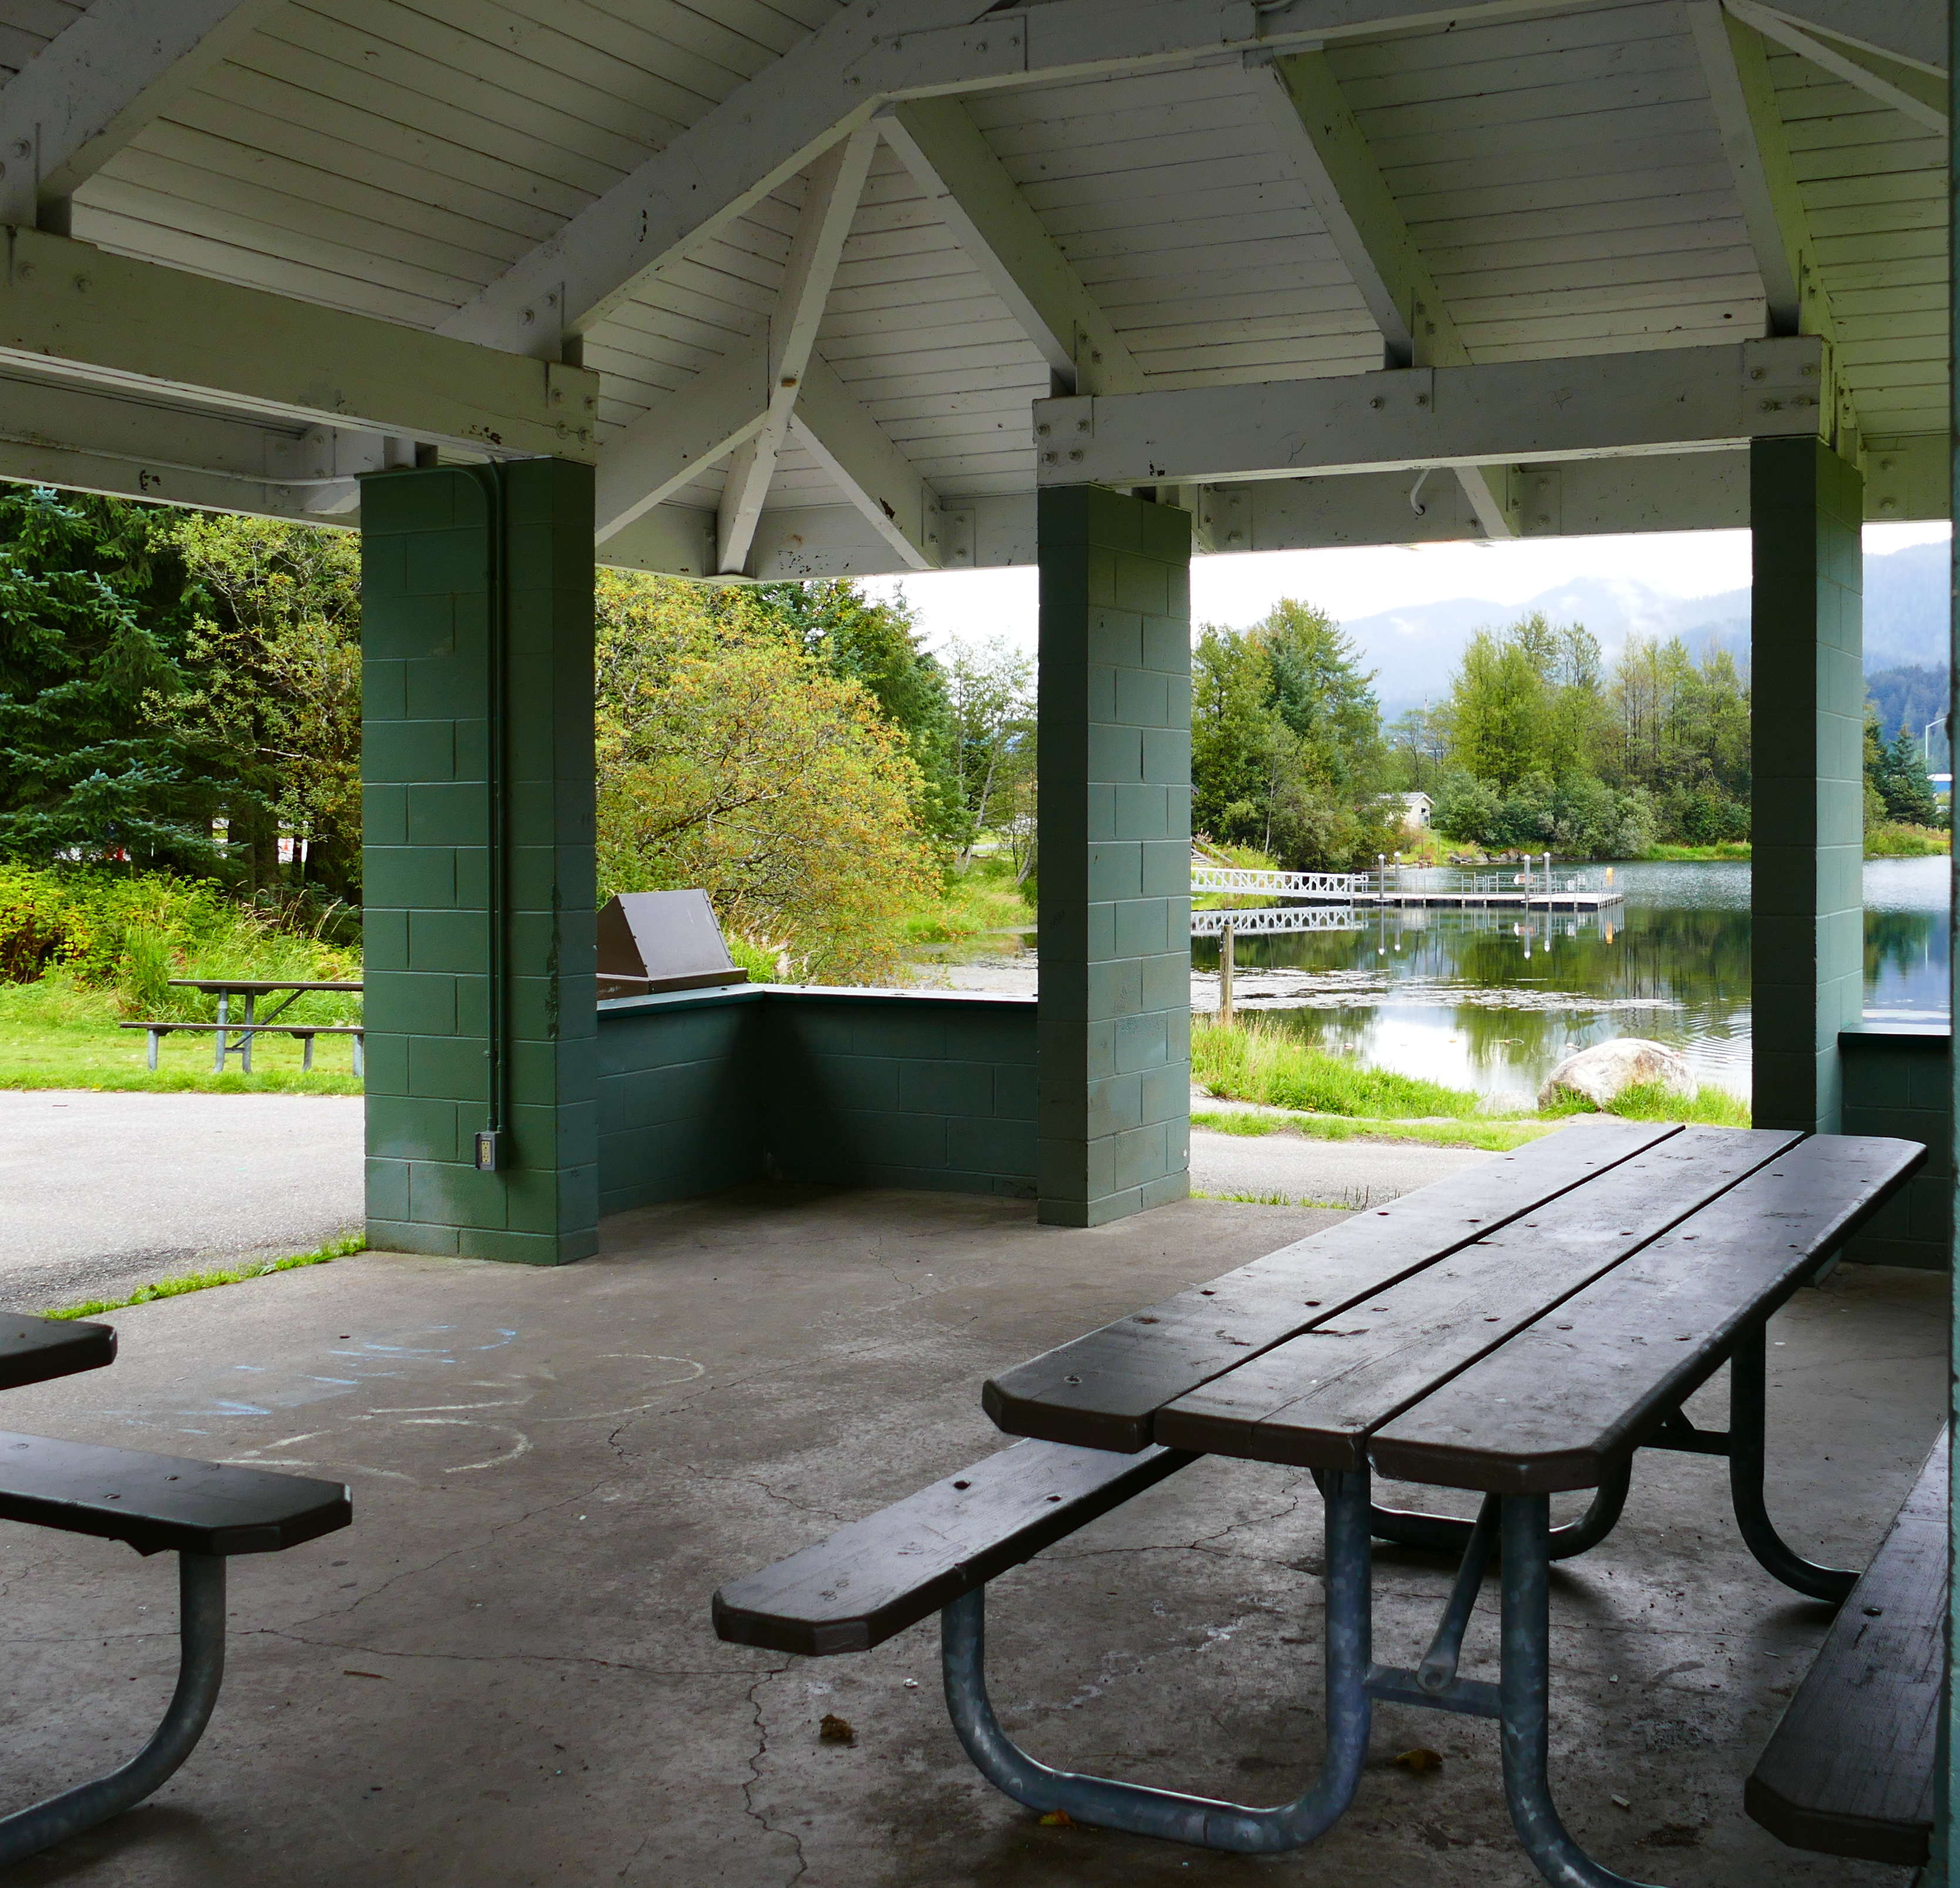 Interior of the picnic pavilion at Twin Lakes